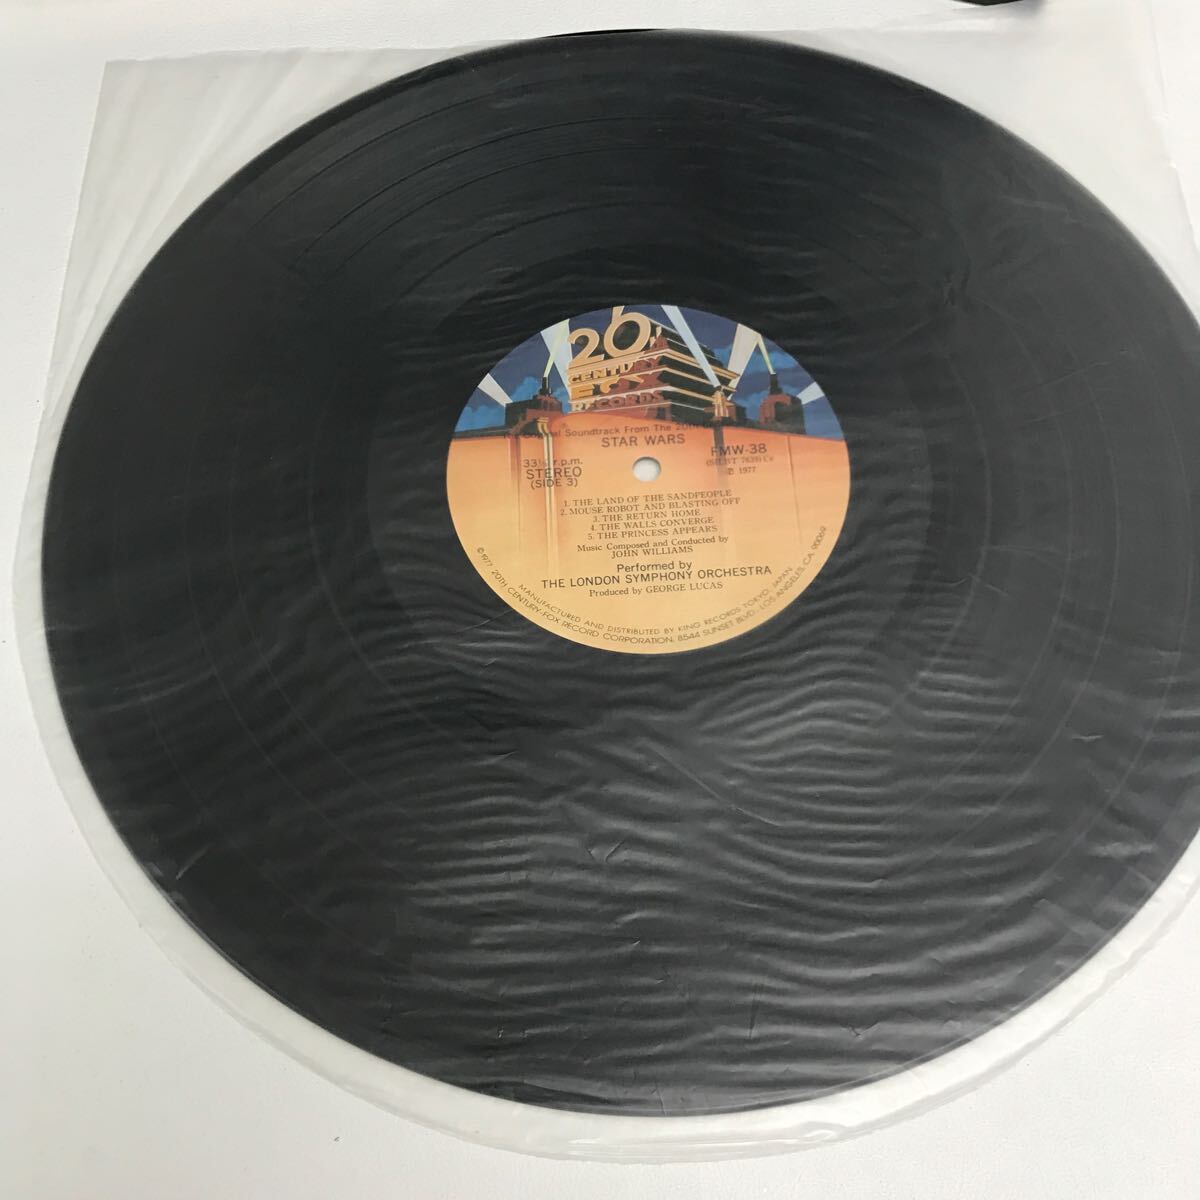 I0423A3 STAR WARS スター・ウォーズ オリジナル・サウンドトラック LP レコード 2枚組 帯付き 音楽 サントラ盤 FMW-37/8 キングレコードの画像7